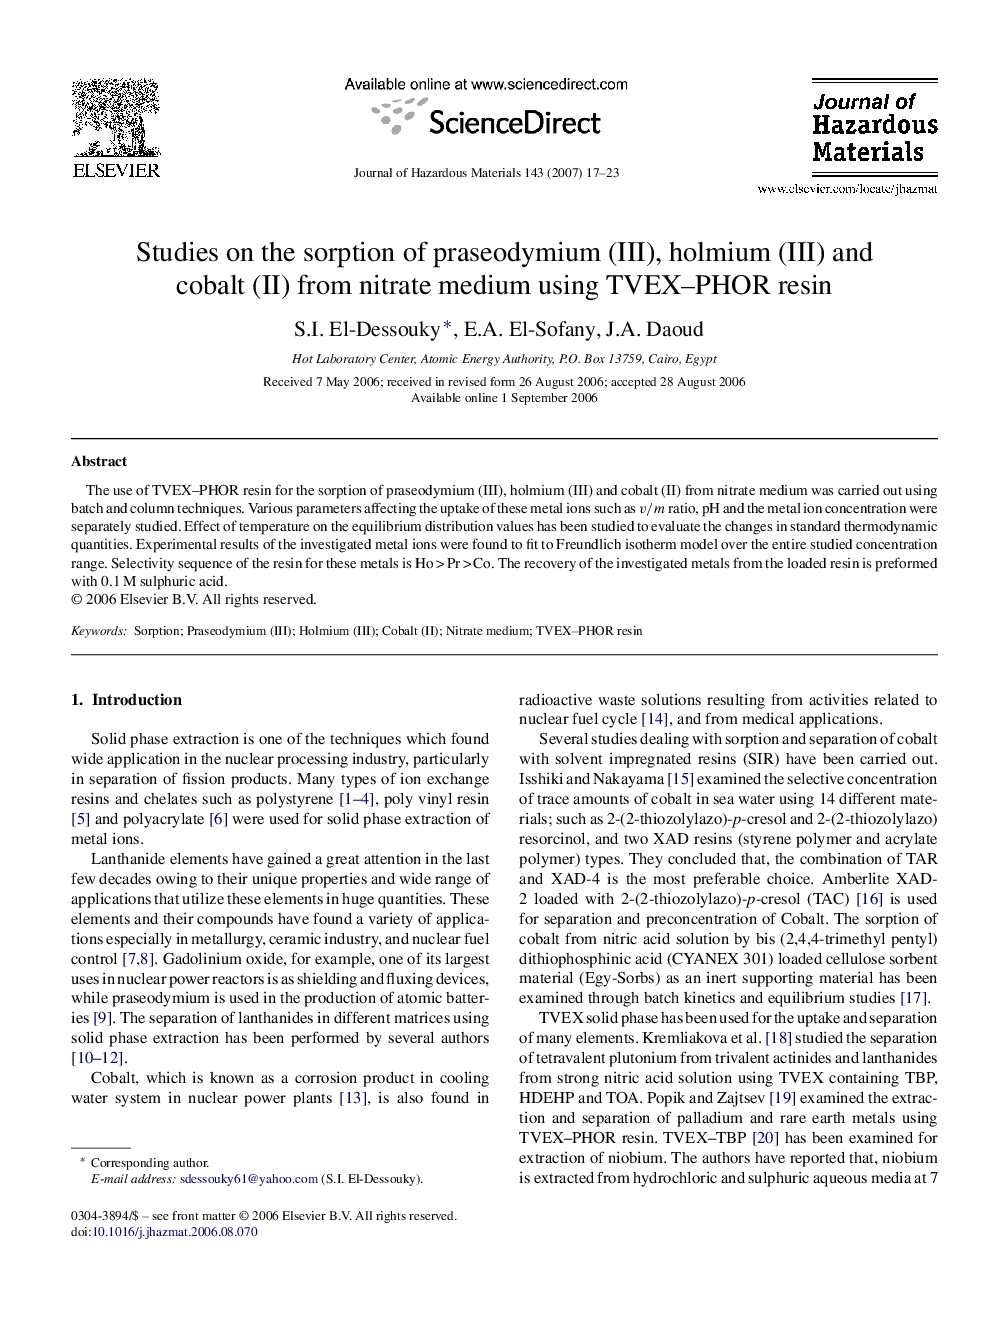 Studies on the sorption of praseodymium (III), holmium (III) and cobalt (II) from nitrate medium using TVEX-PHOR resin